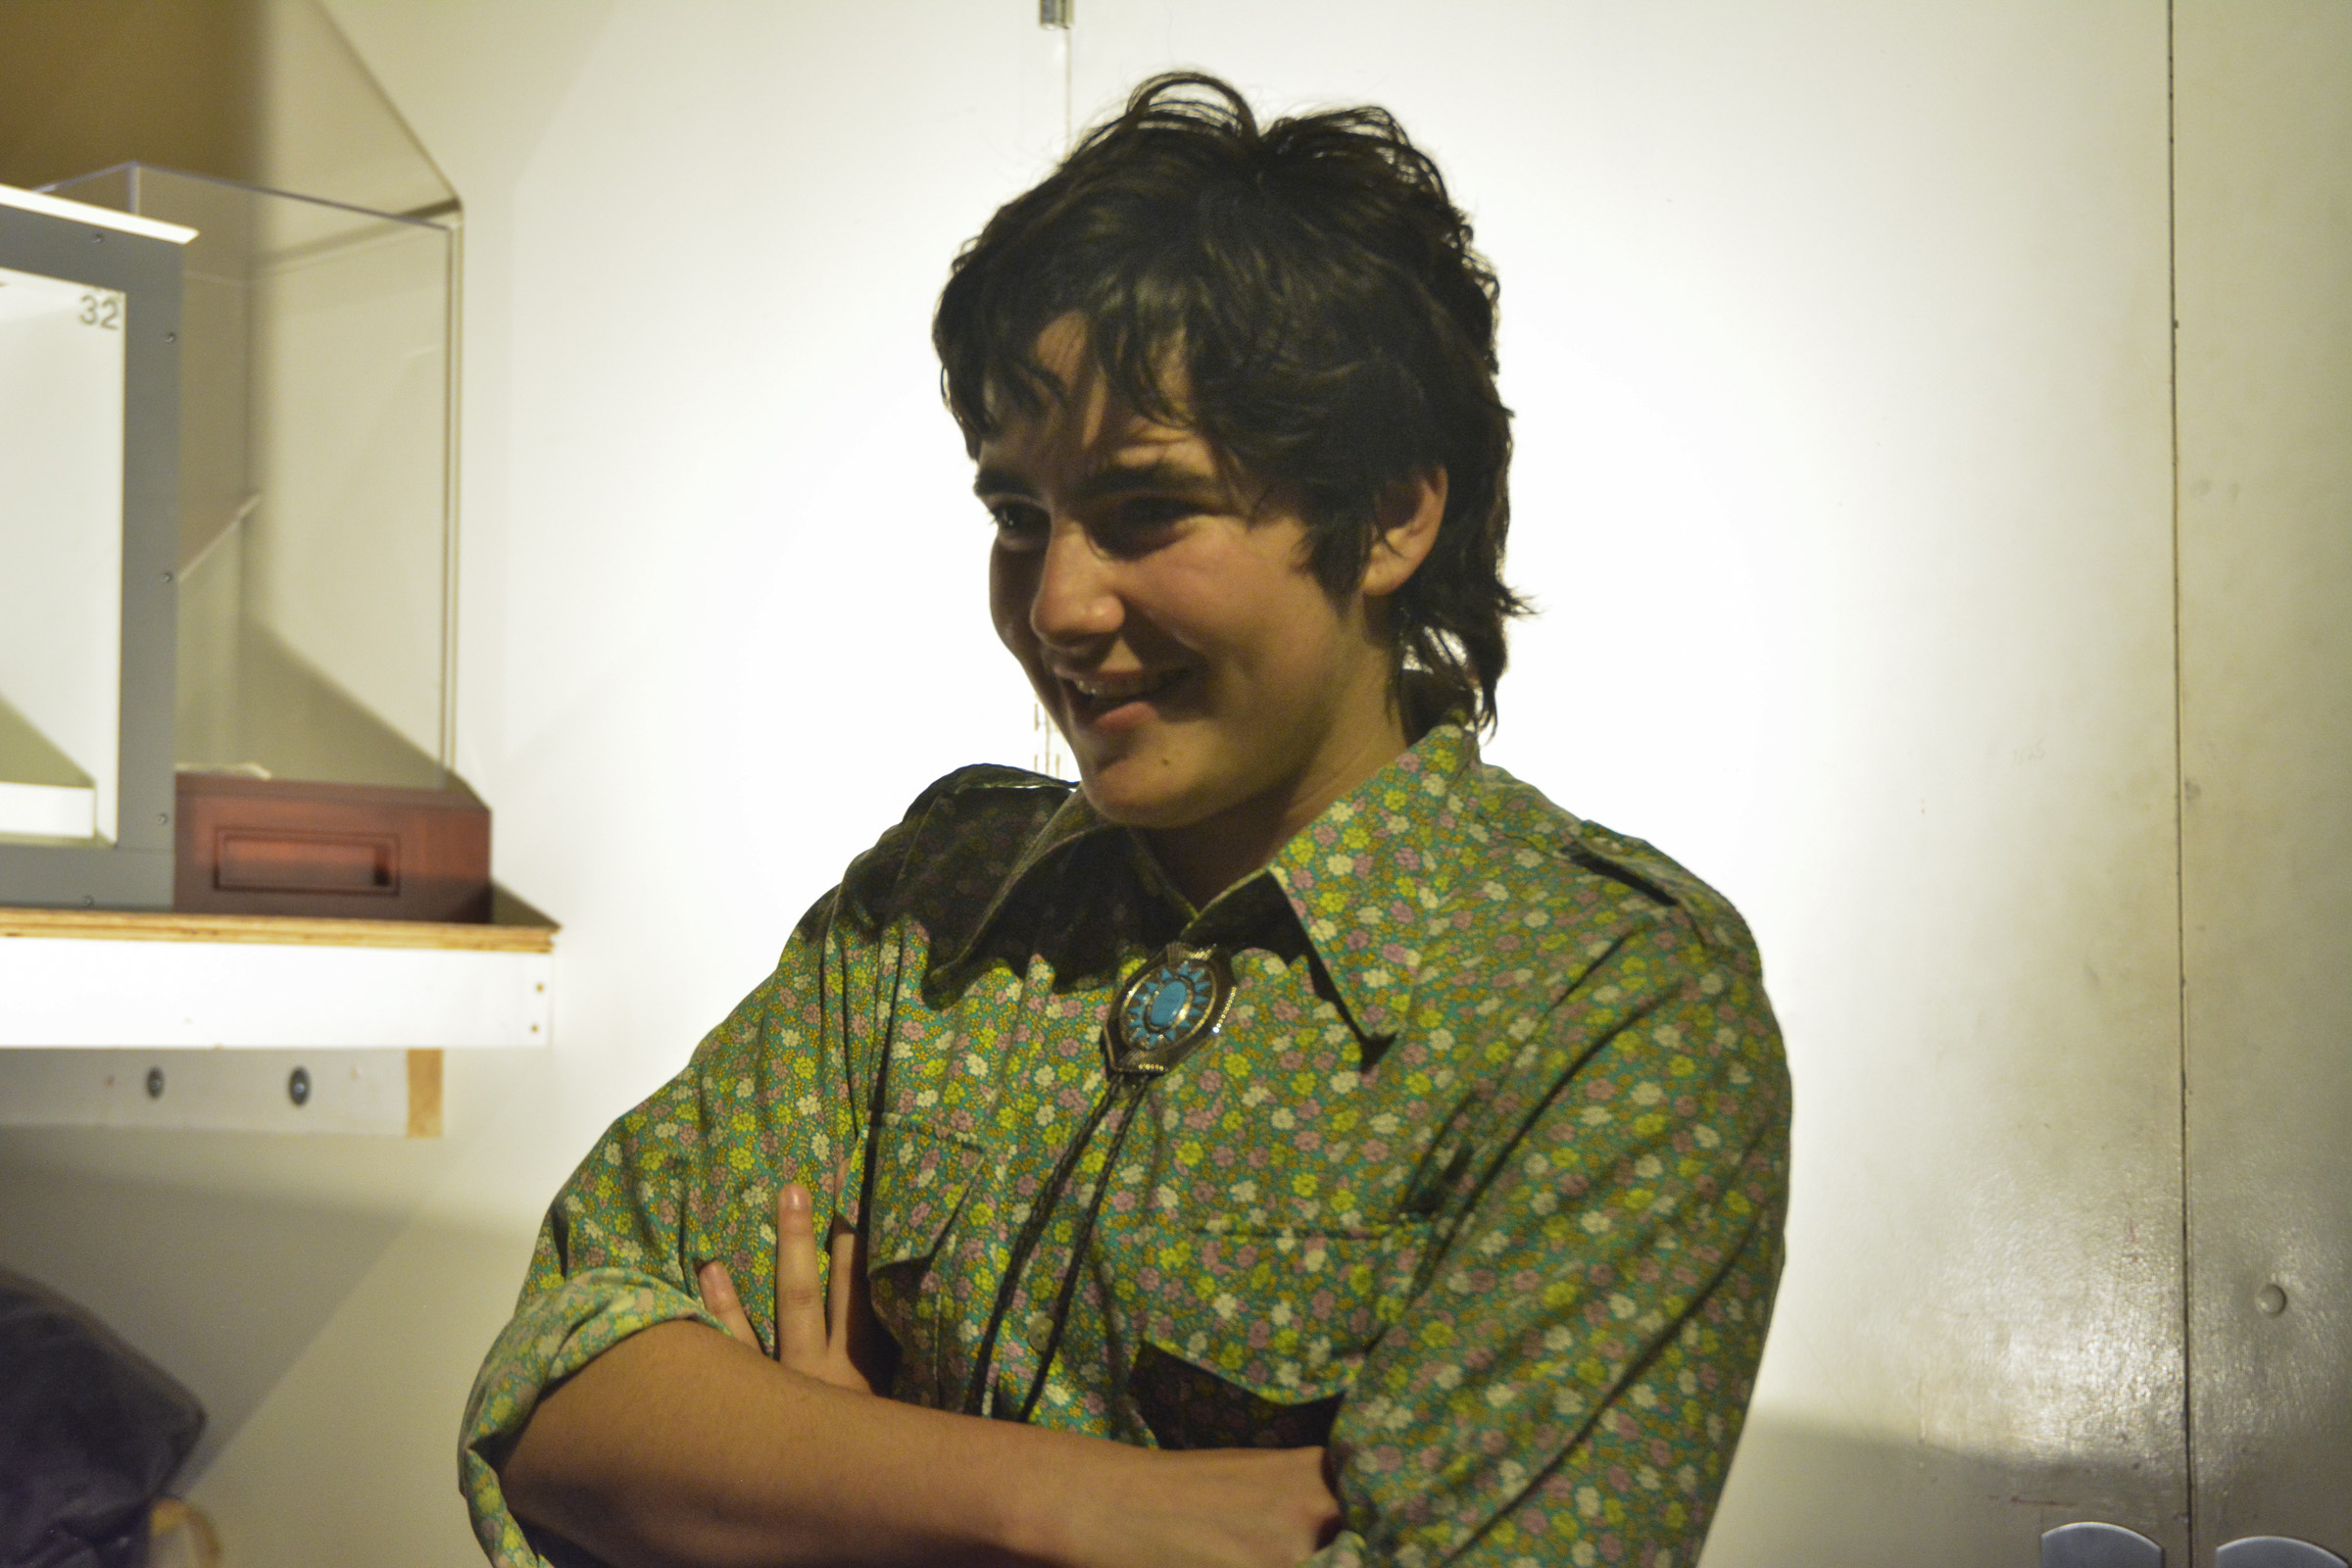 Museum volunteer Marina Labarthe in the audio booth 